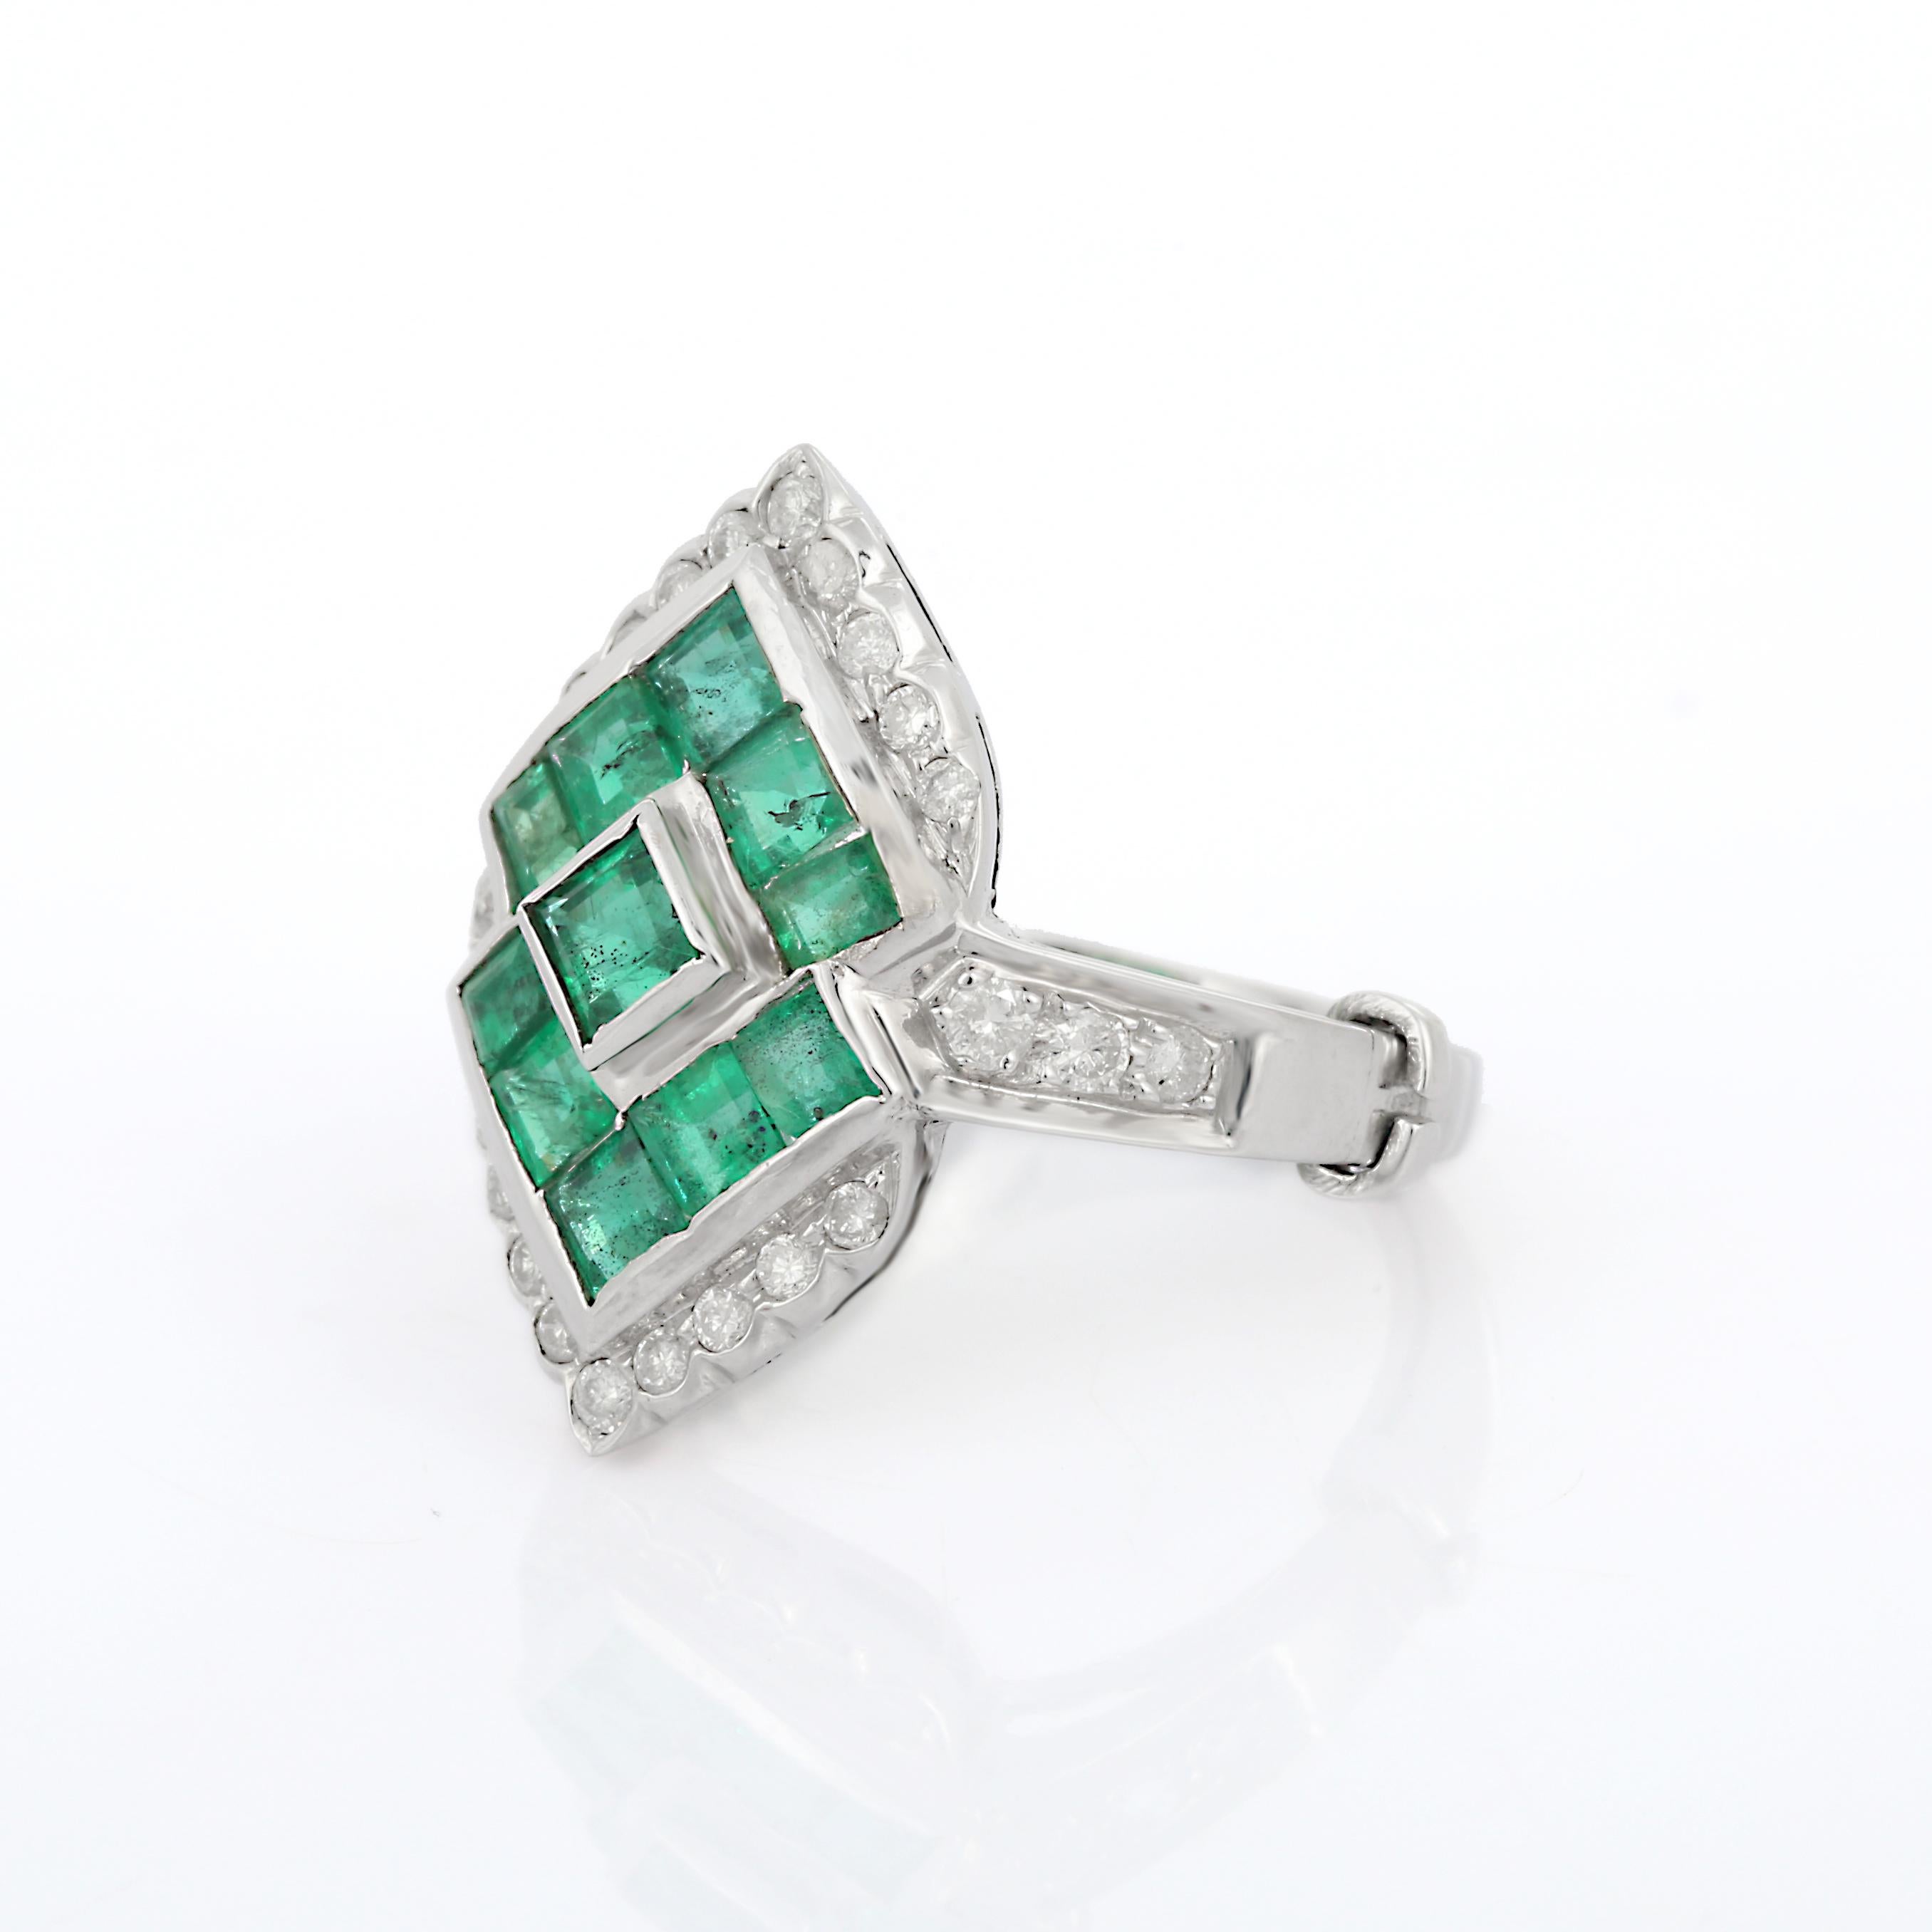 For Sale:  18k Solid White Gold Emerald Diamond Ring, Fine Emerald Ring 3